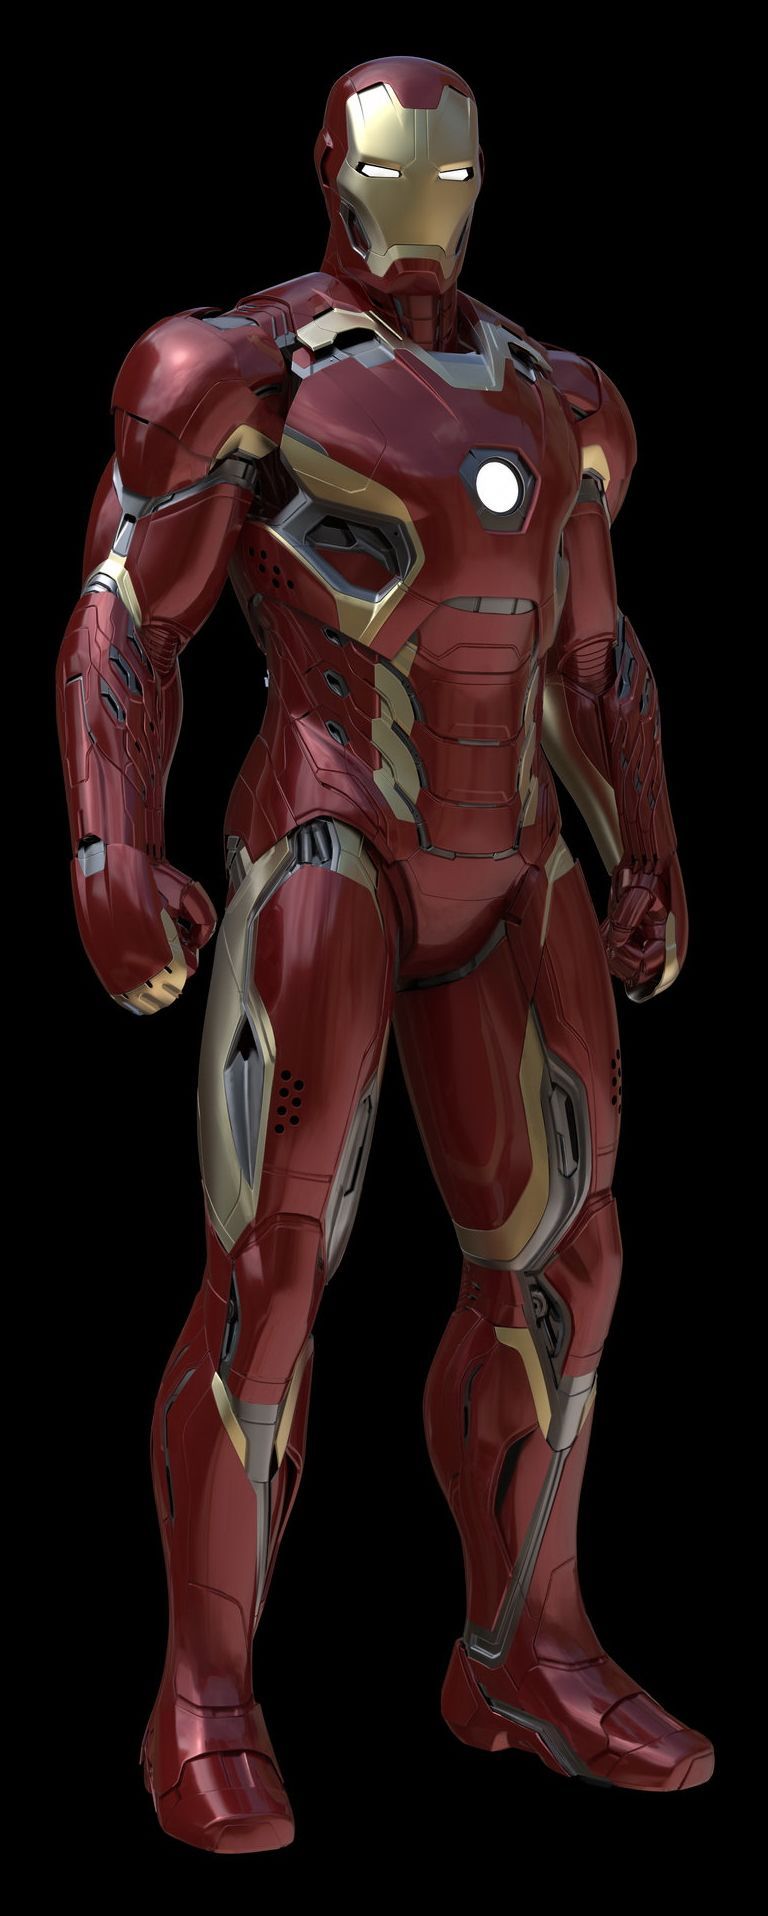 Avengers Concept Art. IRON MAN Mark XLV. Iron man armor, Iron man wallpaper, Iron man